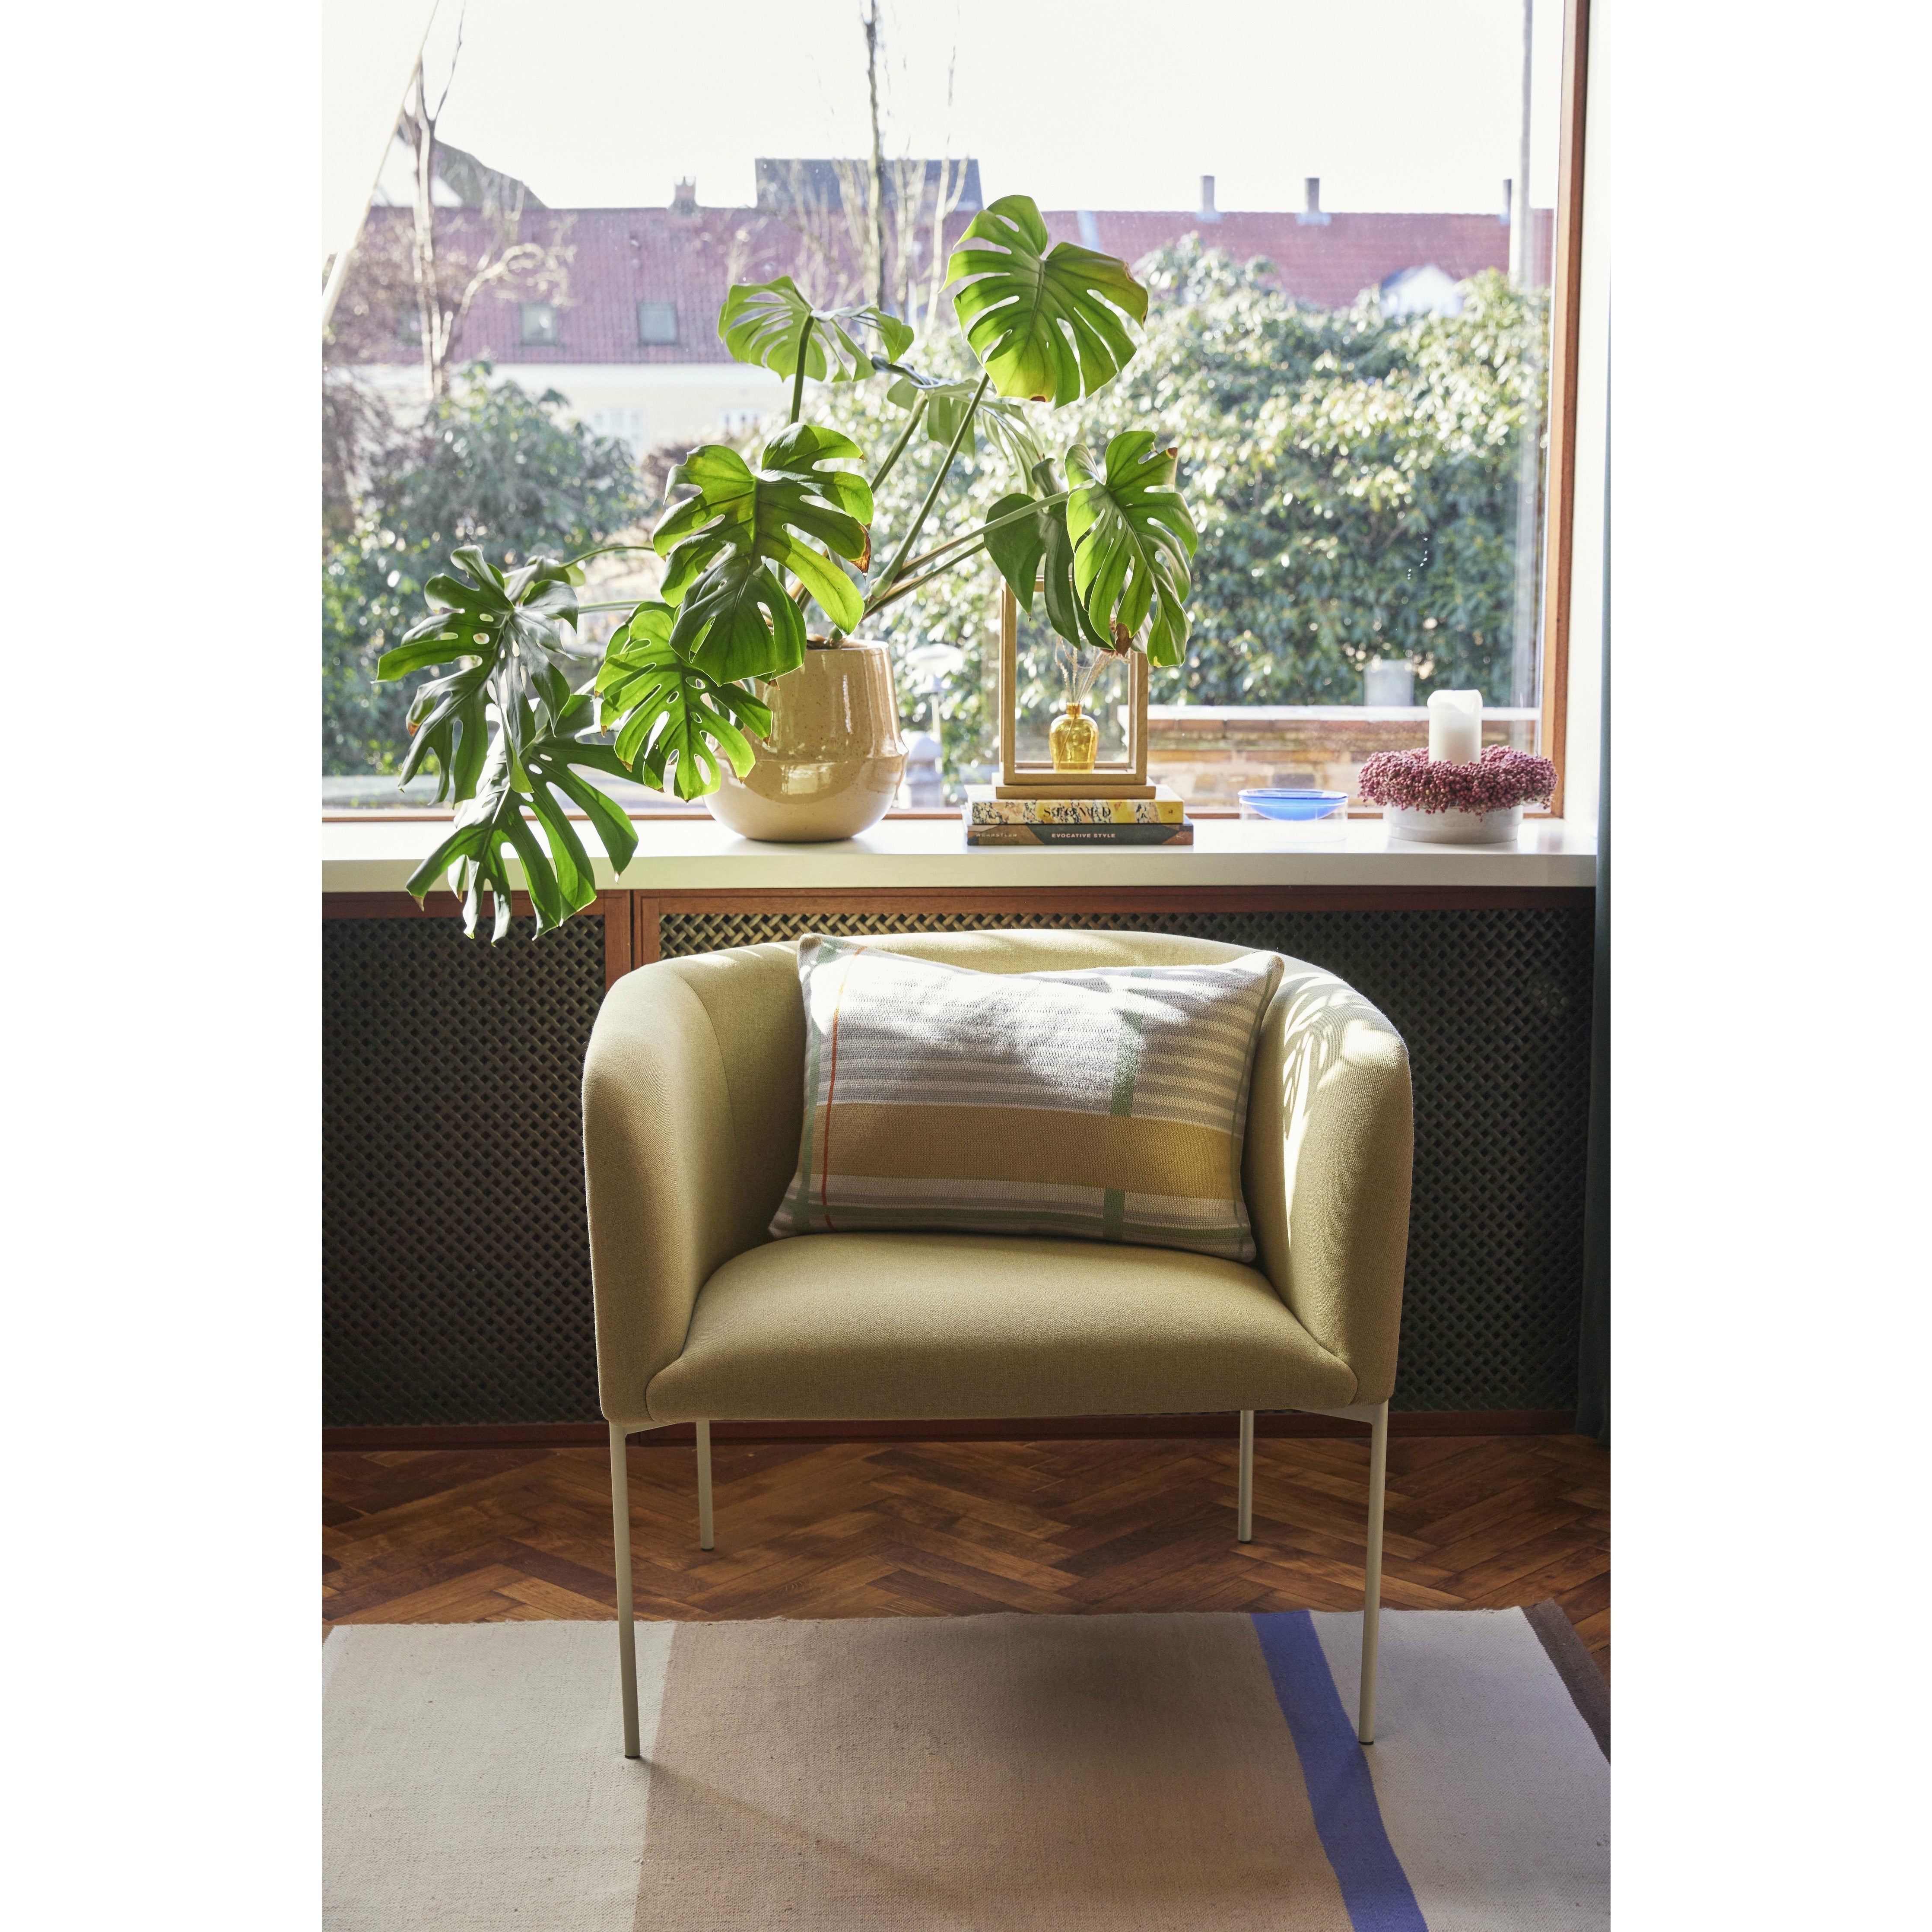 Hübsch Eyrie Lounge sedia poliestere/metallo giallo/verde chiaro